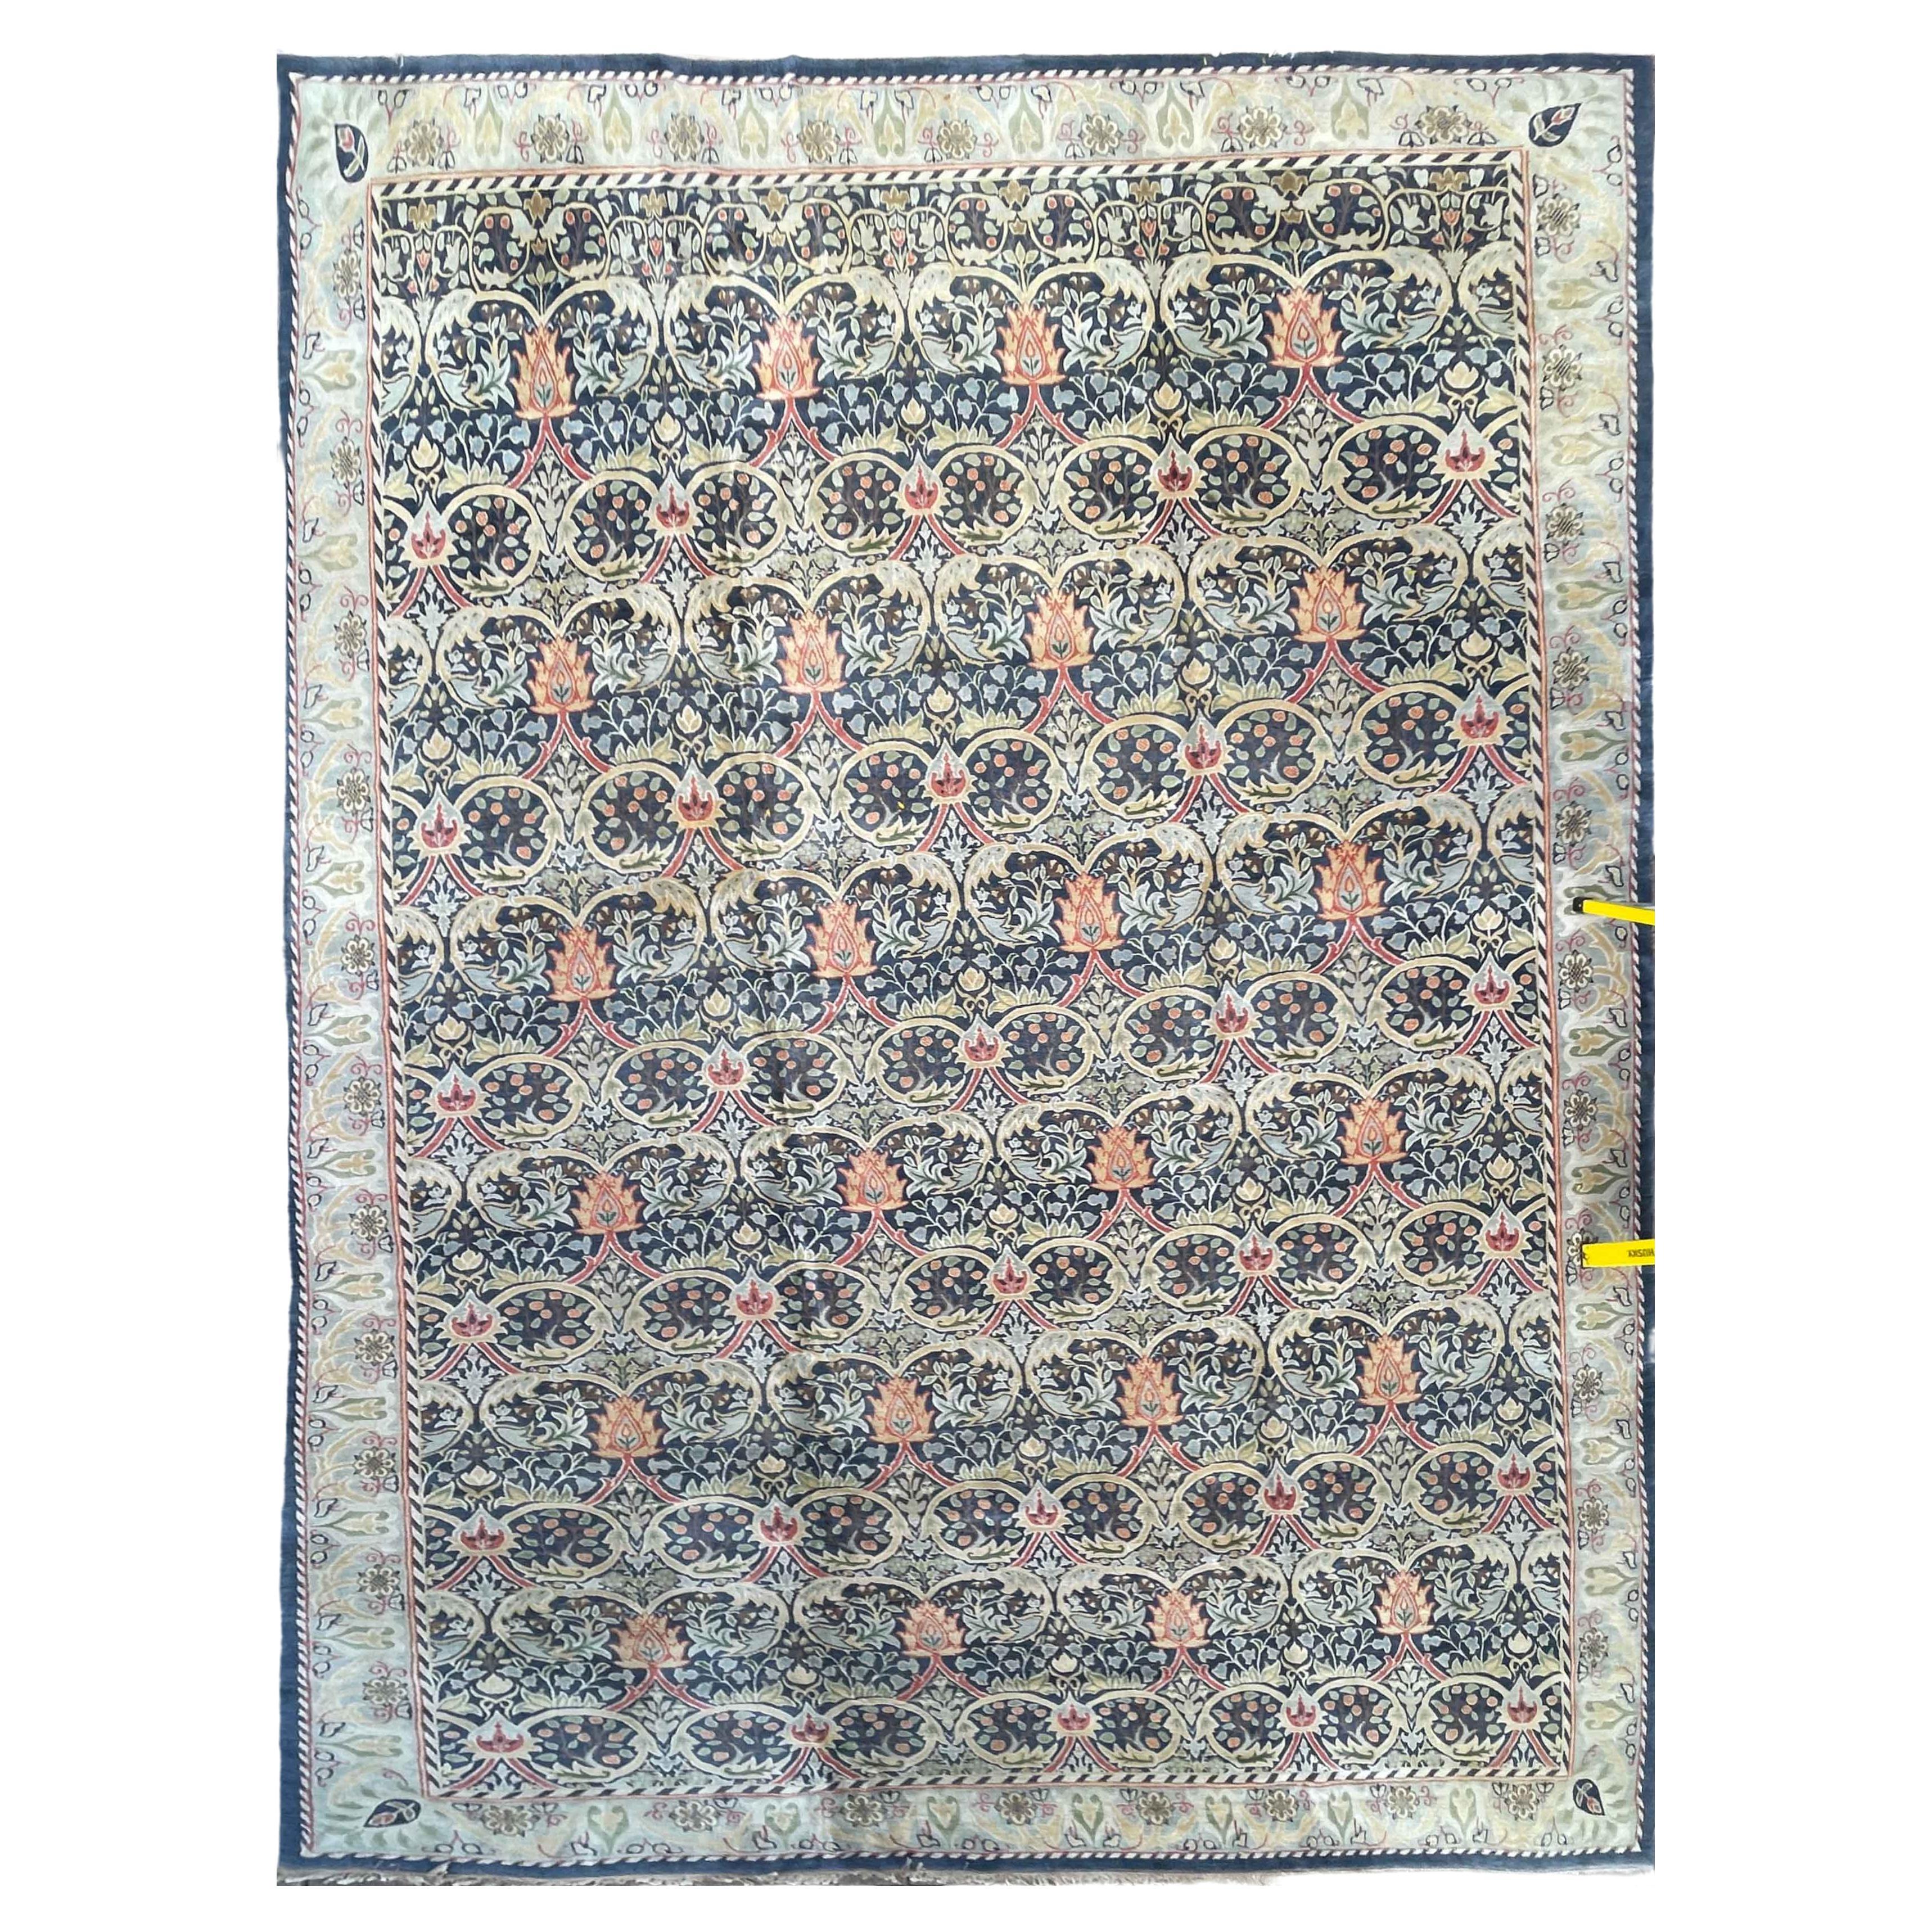 Nepal Carpet, Over Size 